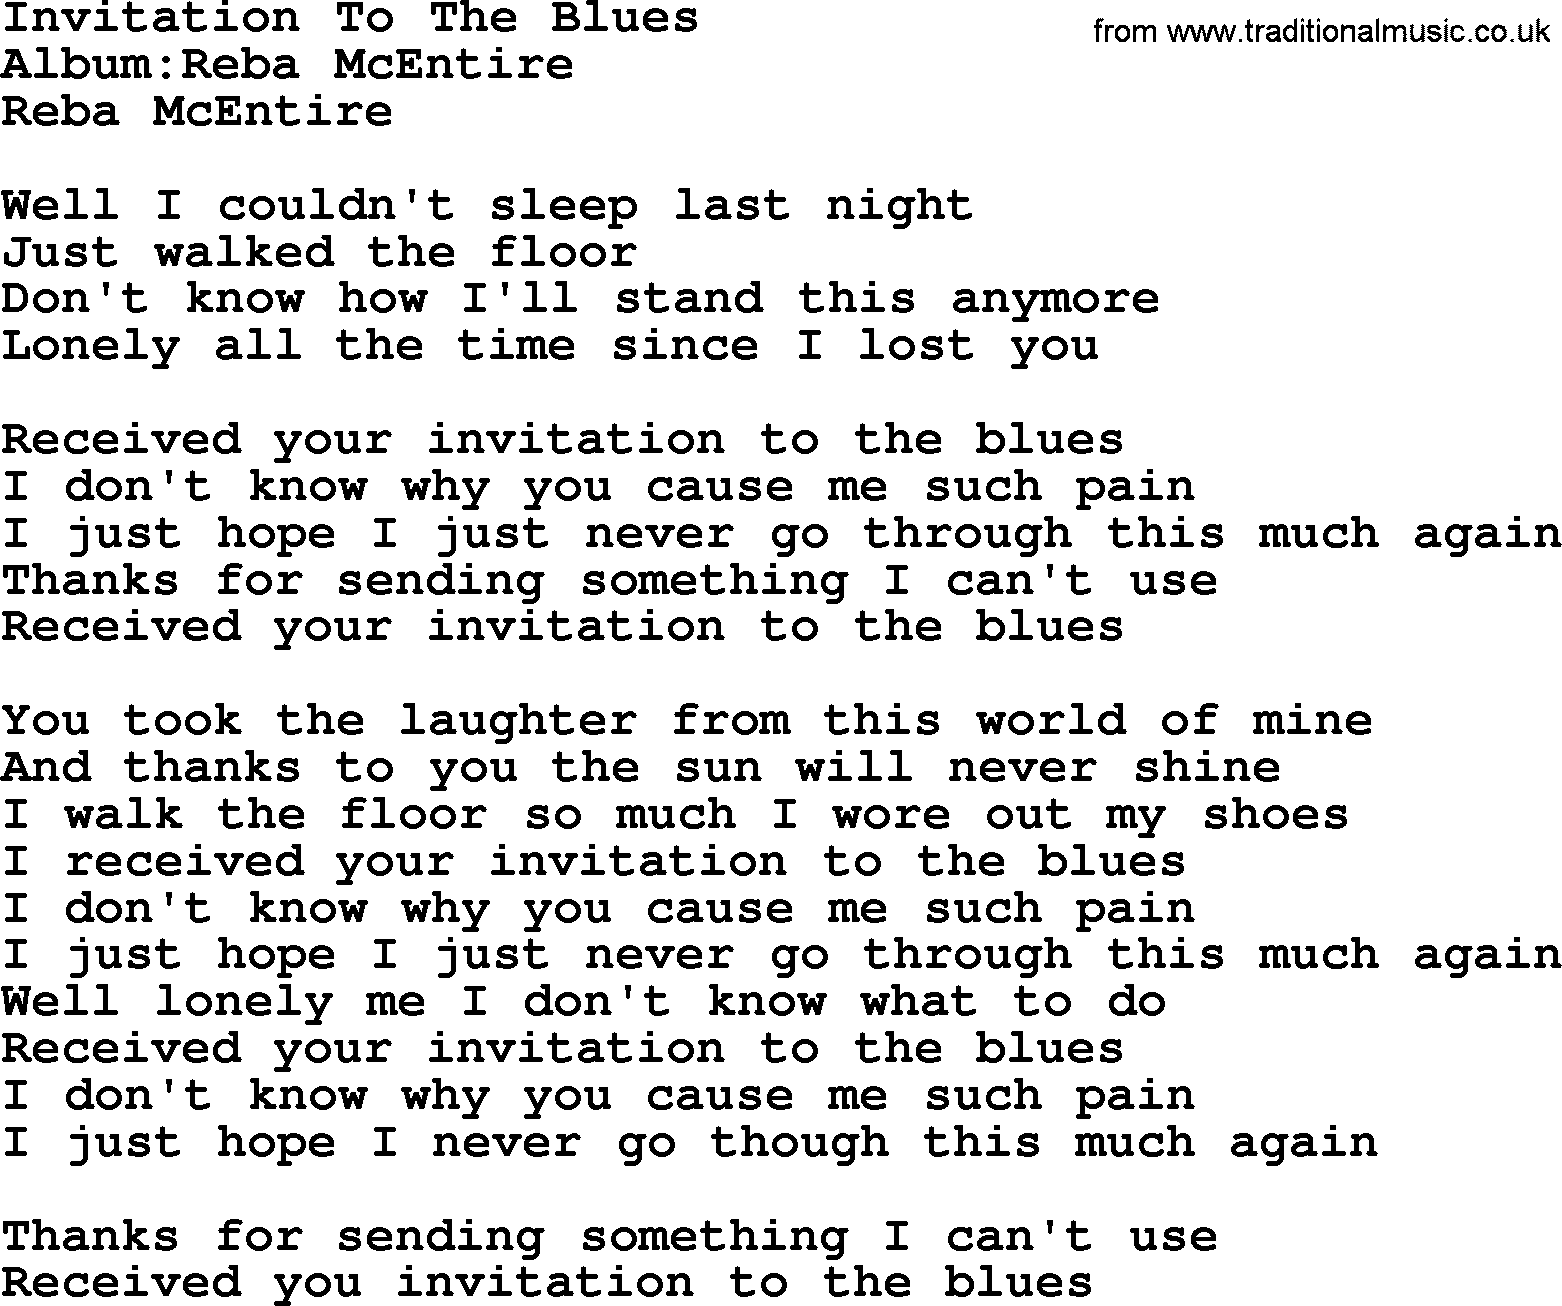 Reba McEntire song: Invitation To The Blues lyrics